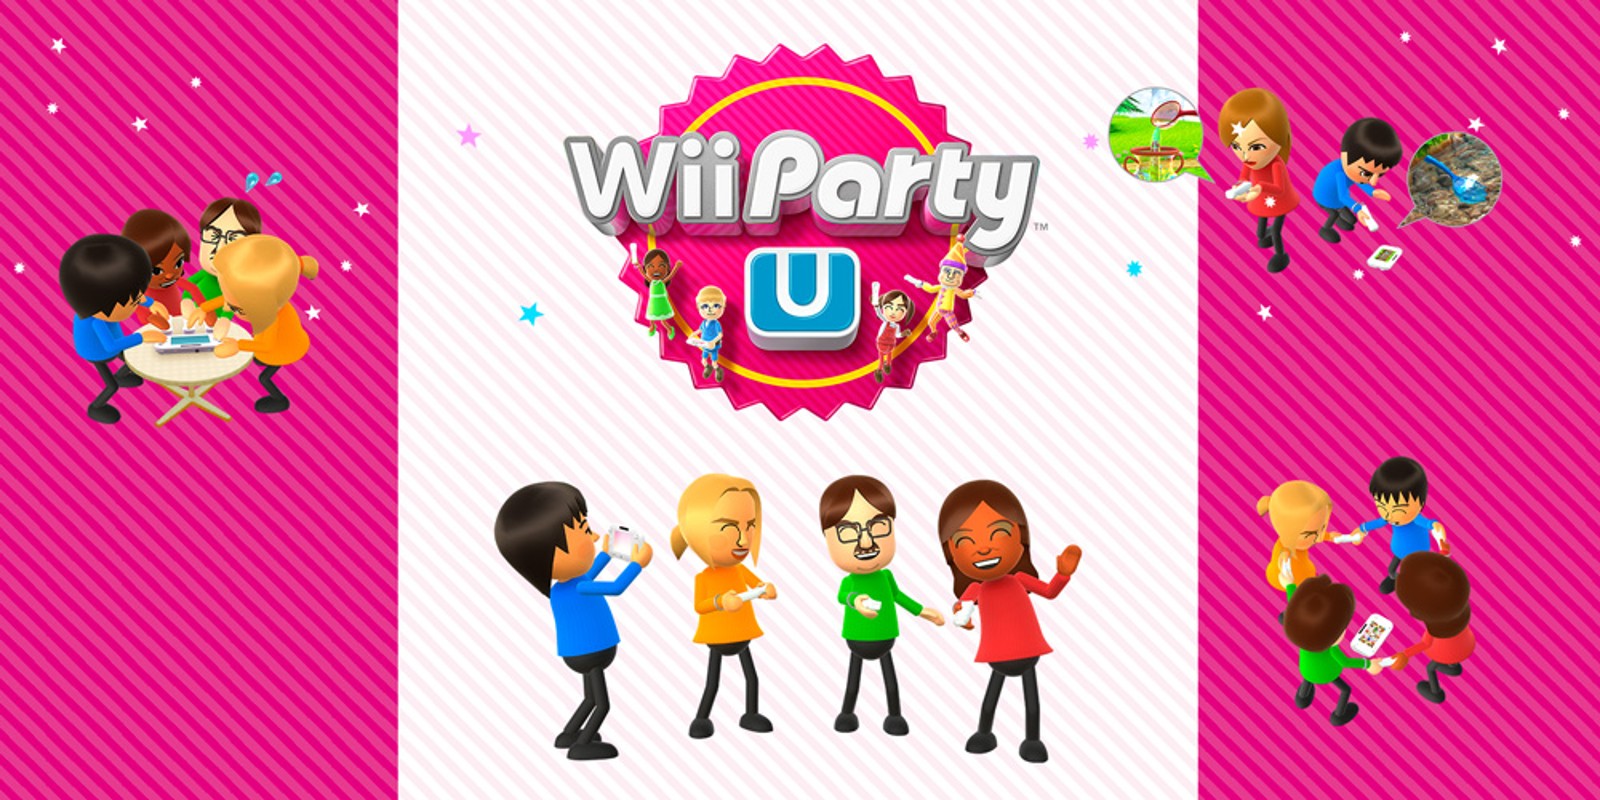 Wii Party U | Wii U games | Games | Nintendo